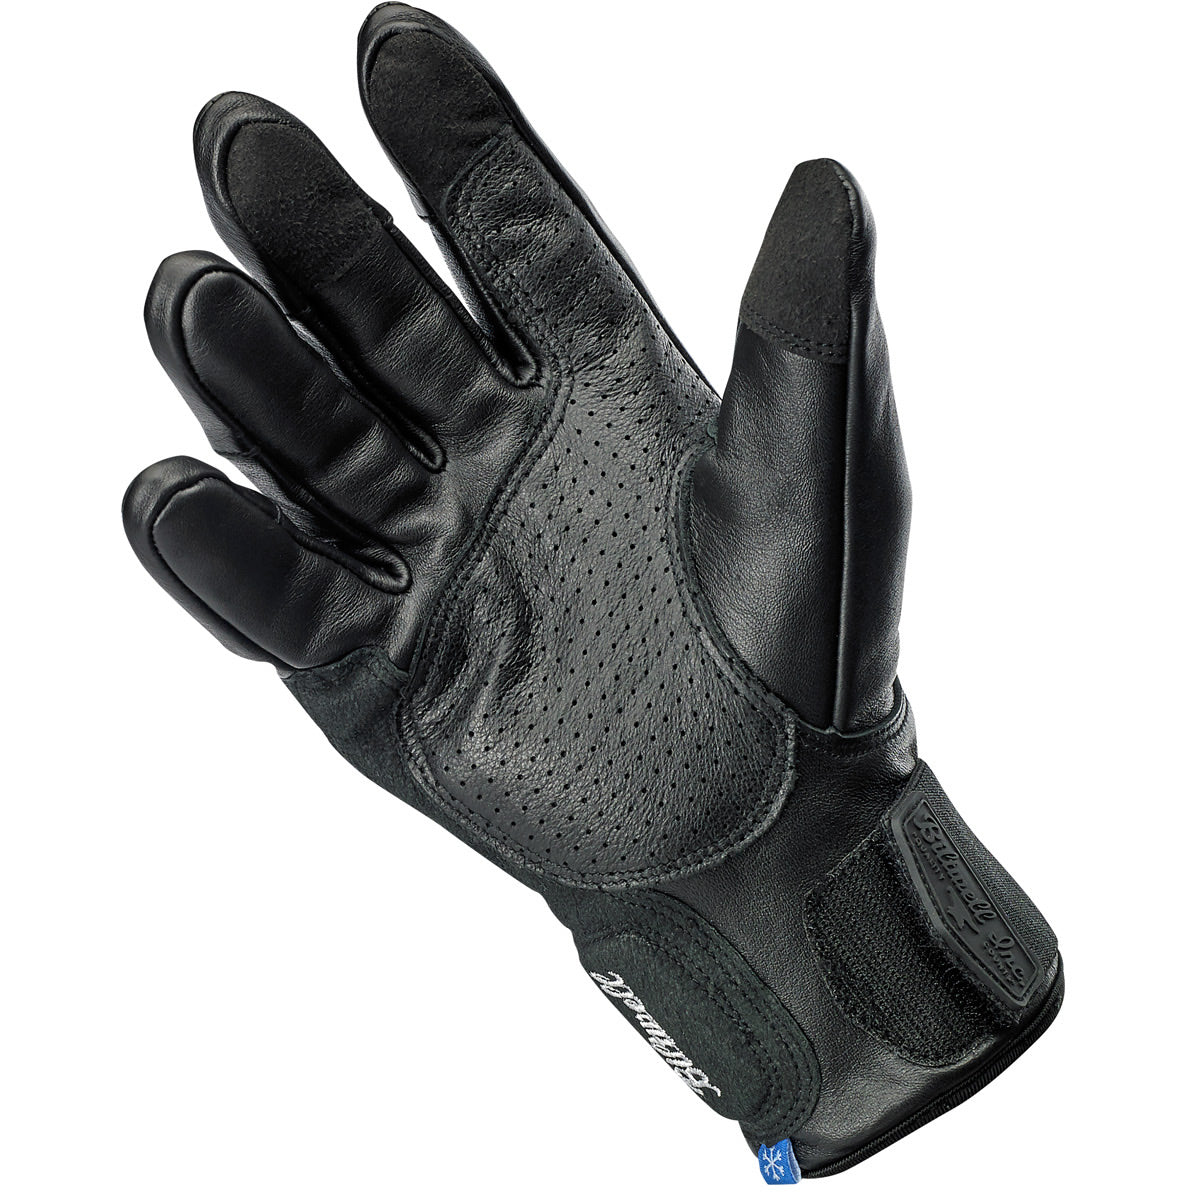 Belden Gloves - Black/Black